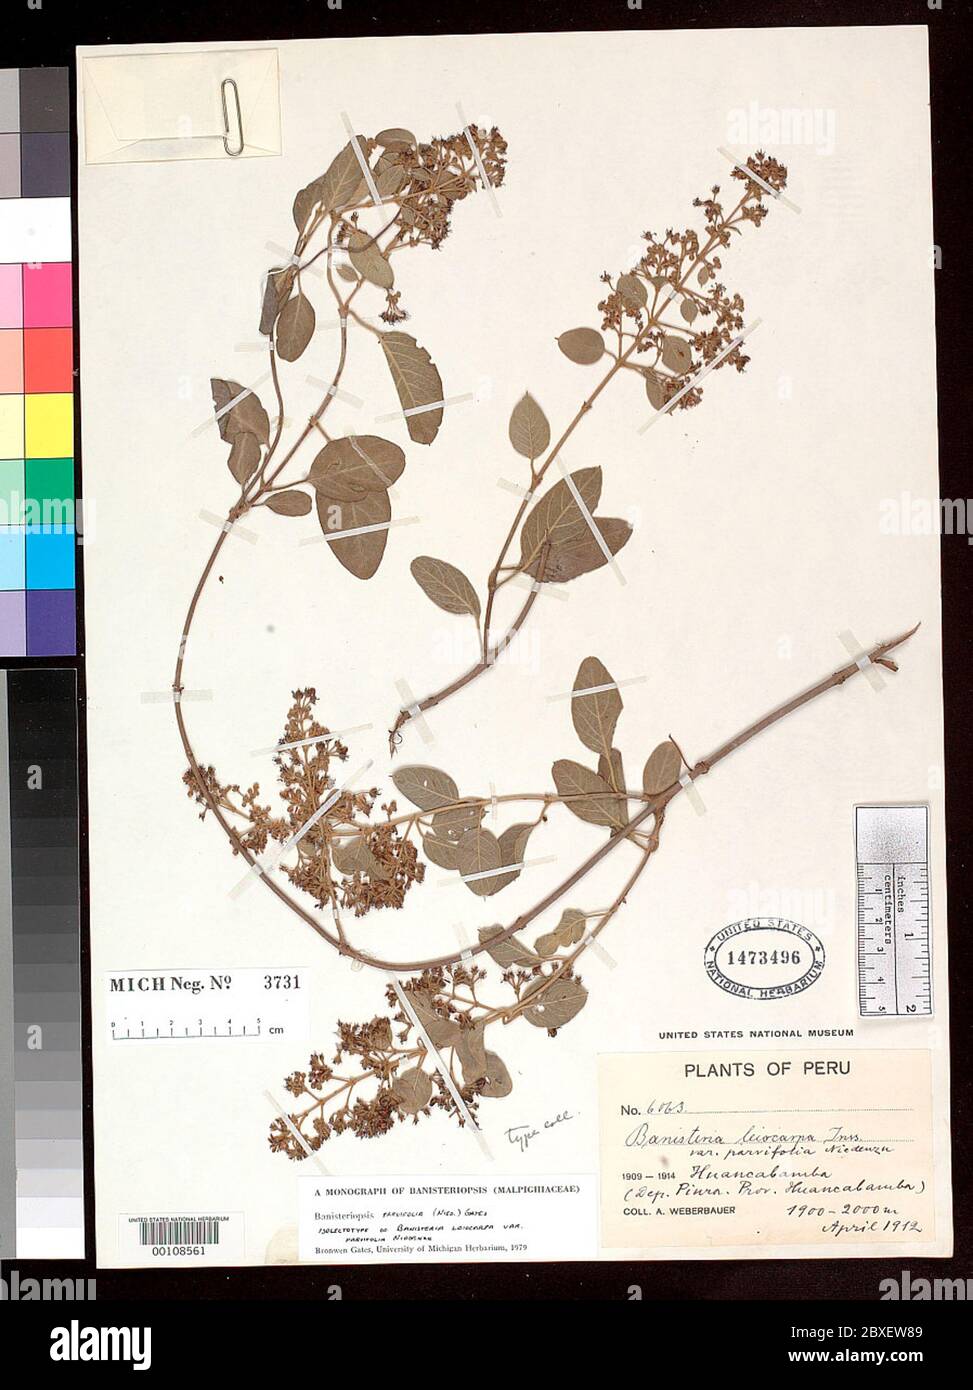 00108561.tif Banisteria leiocarpa var parvifolia Nied in Engl. Stock Photo